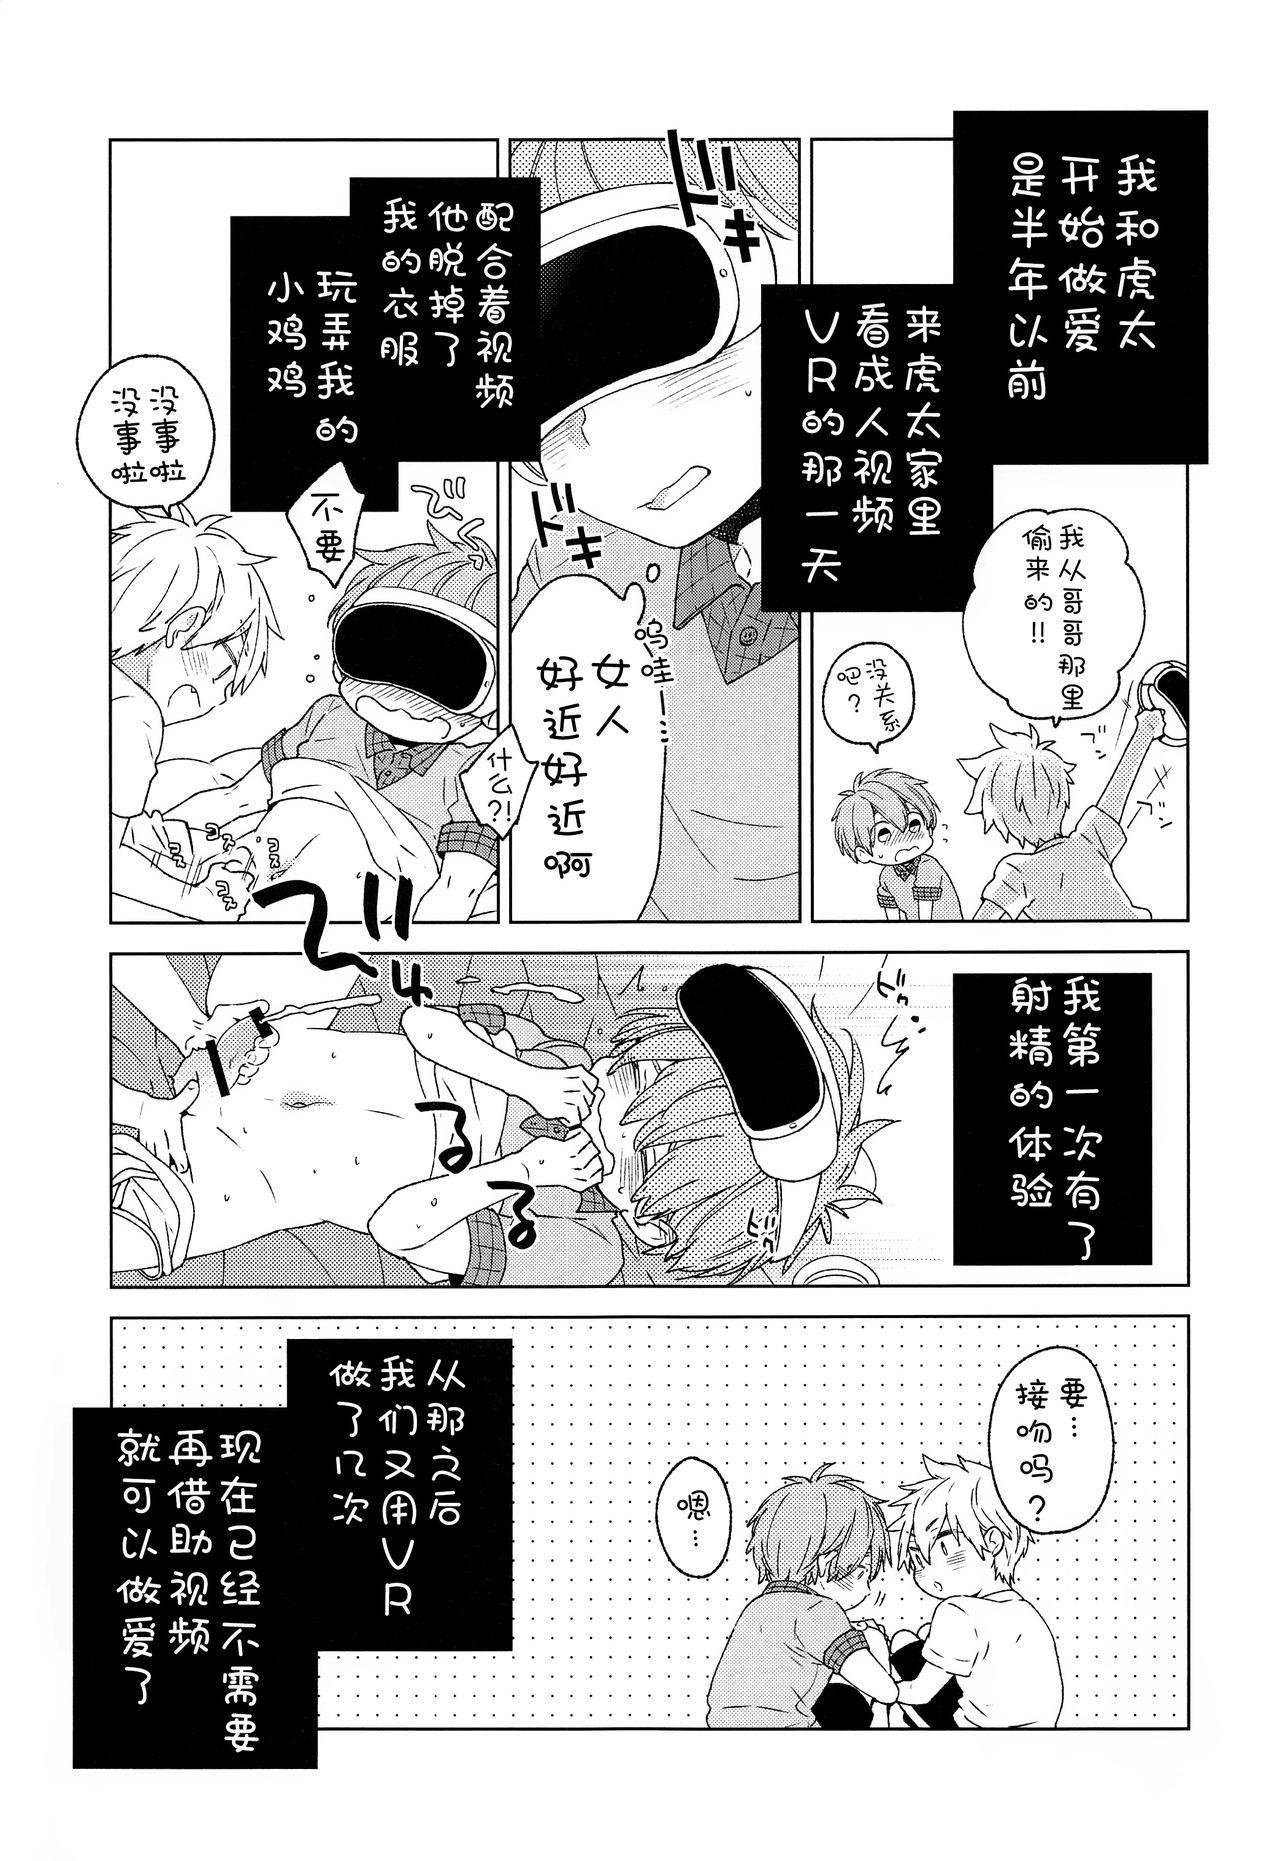 Ginger Tomodachi to Suru no wa Warui Koto? - Is it wrong to have sex with my friend? - Original Selfie - Page 4